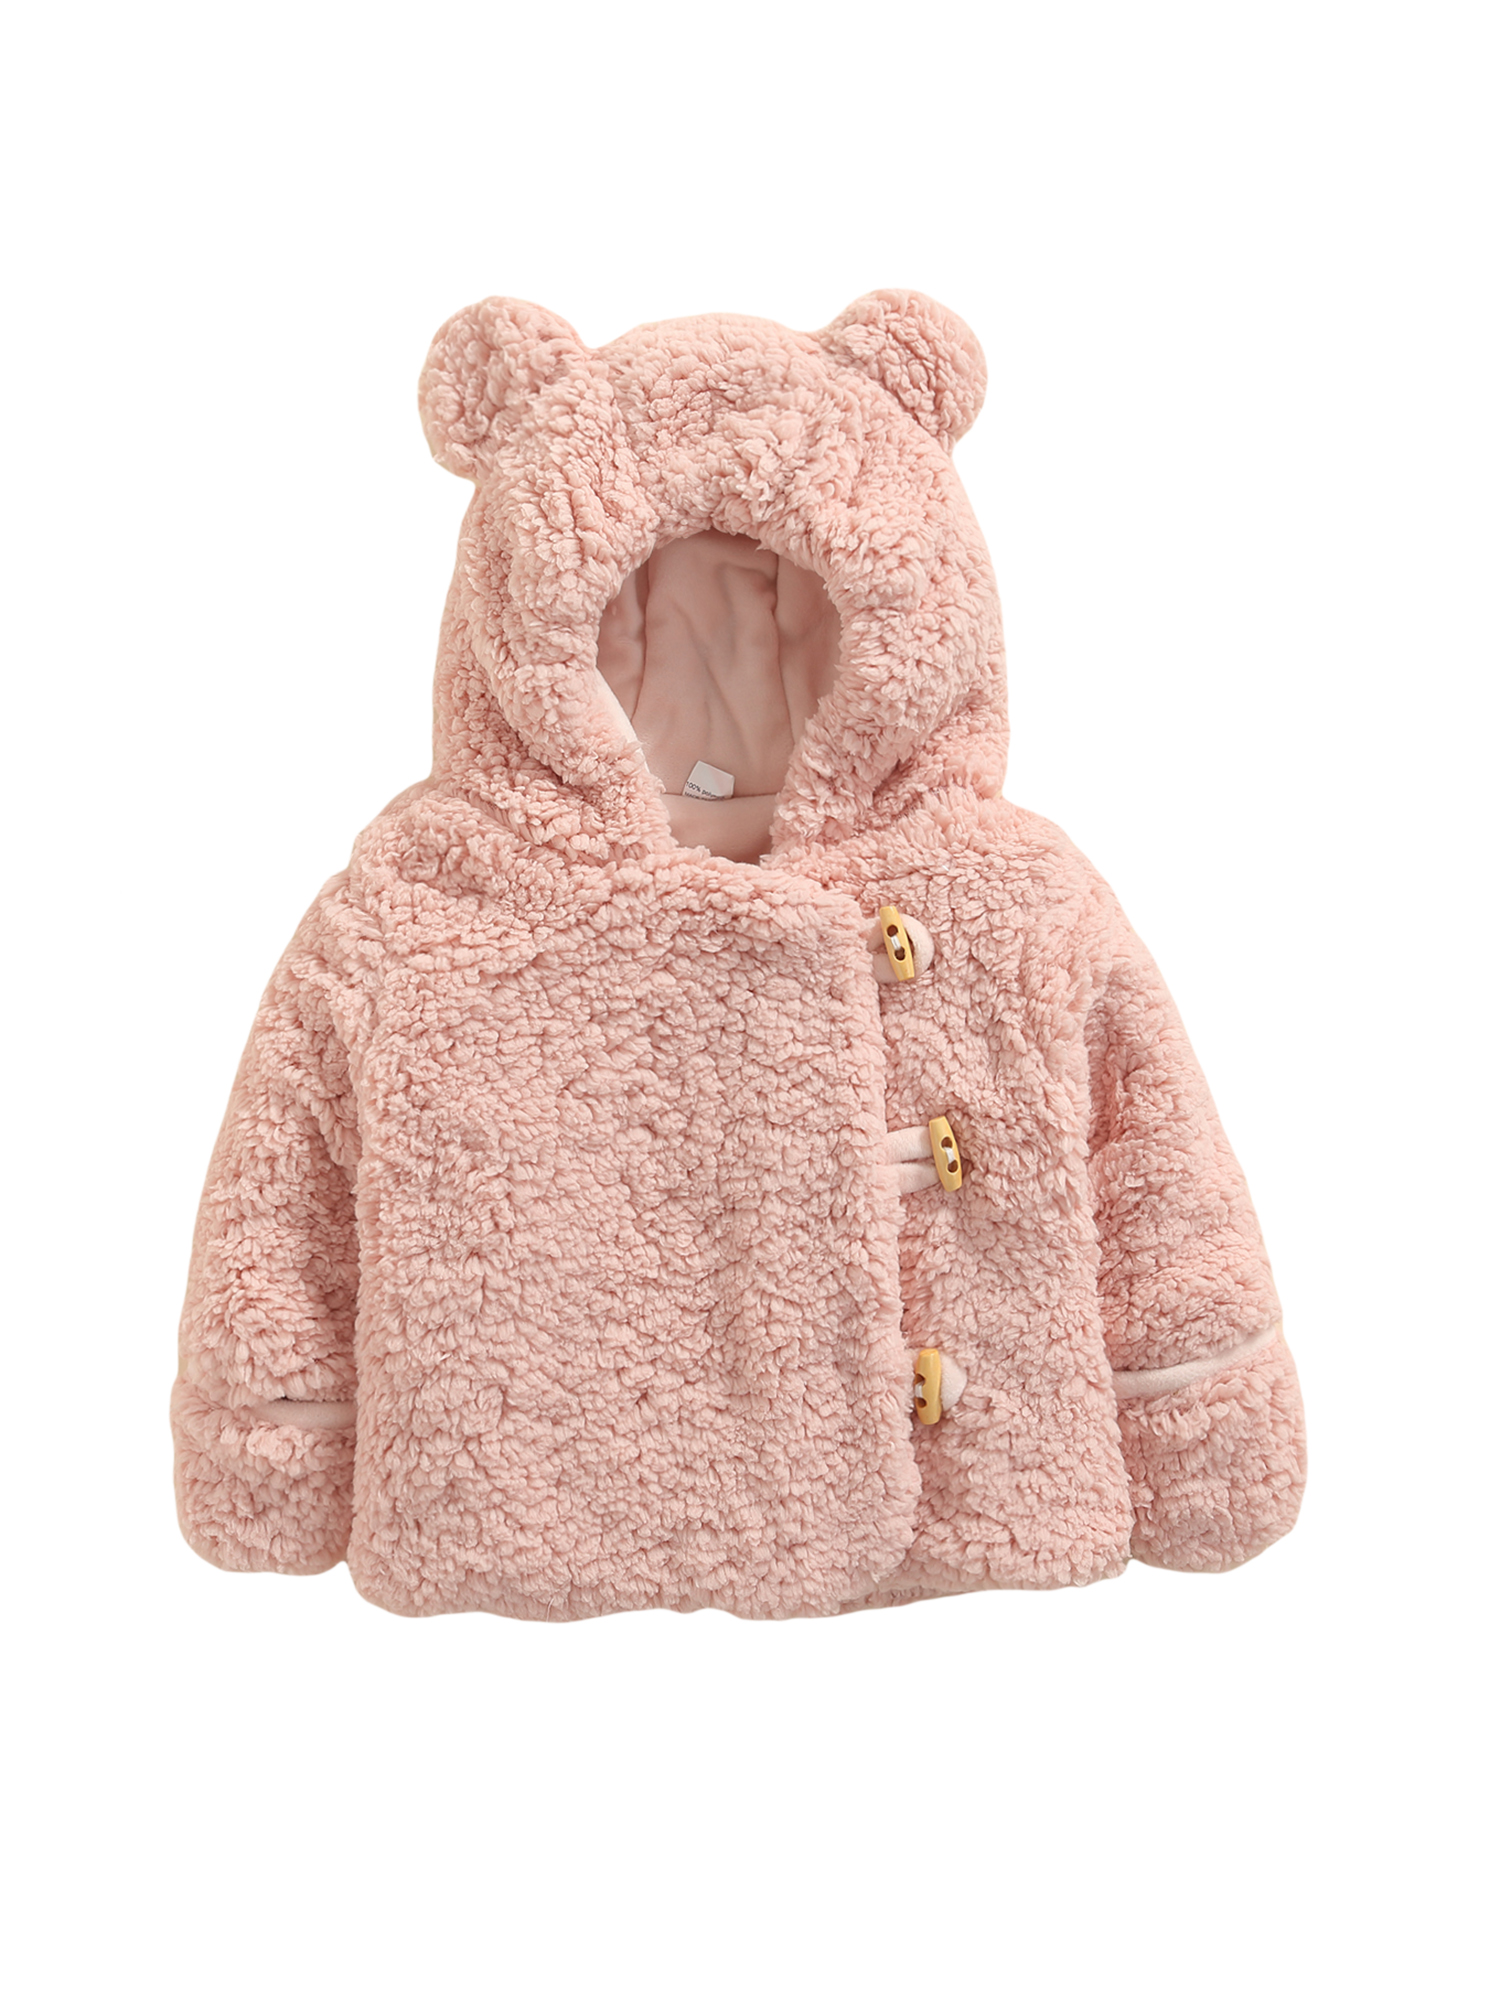 aturustex Baby Boys Girls Fleece Jacket Bear Ear Hoodie Warm Winter Outwear Top - image 1 of 7